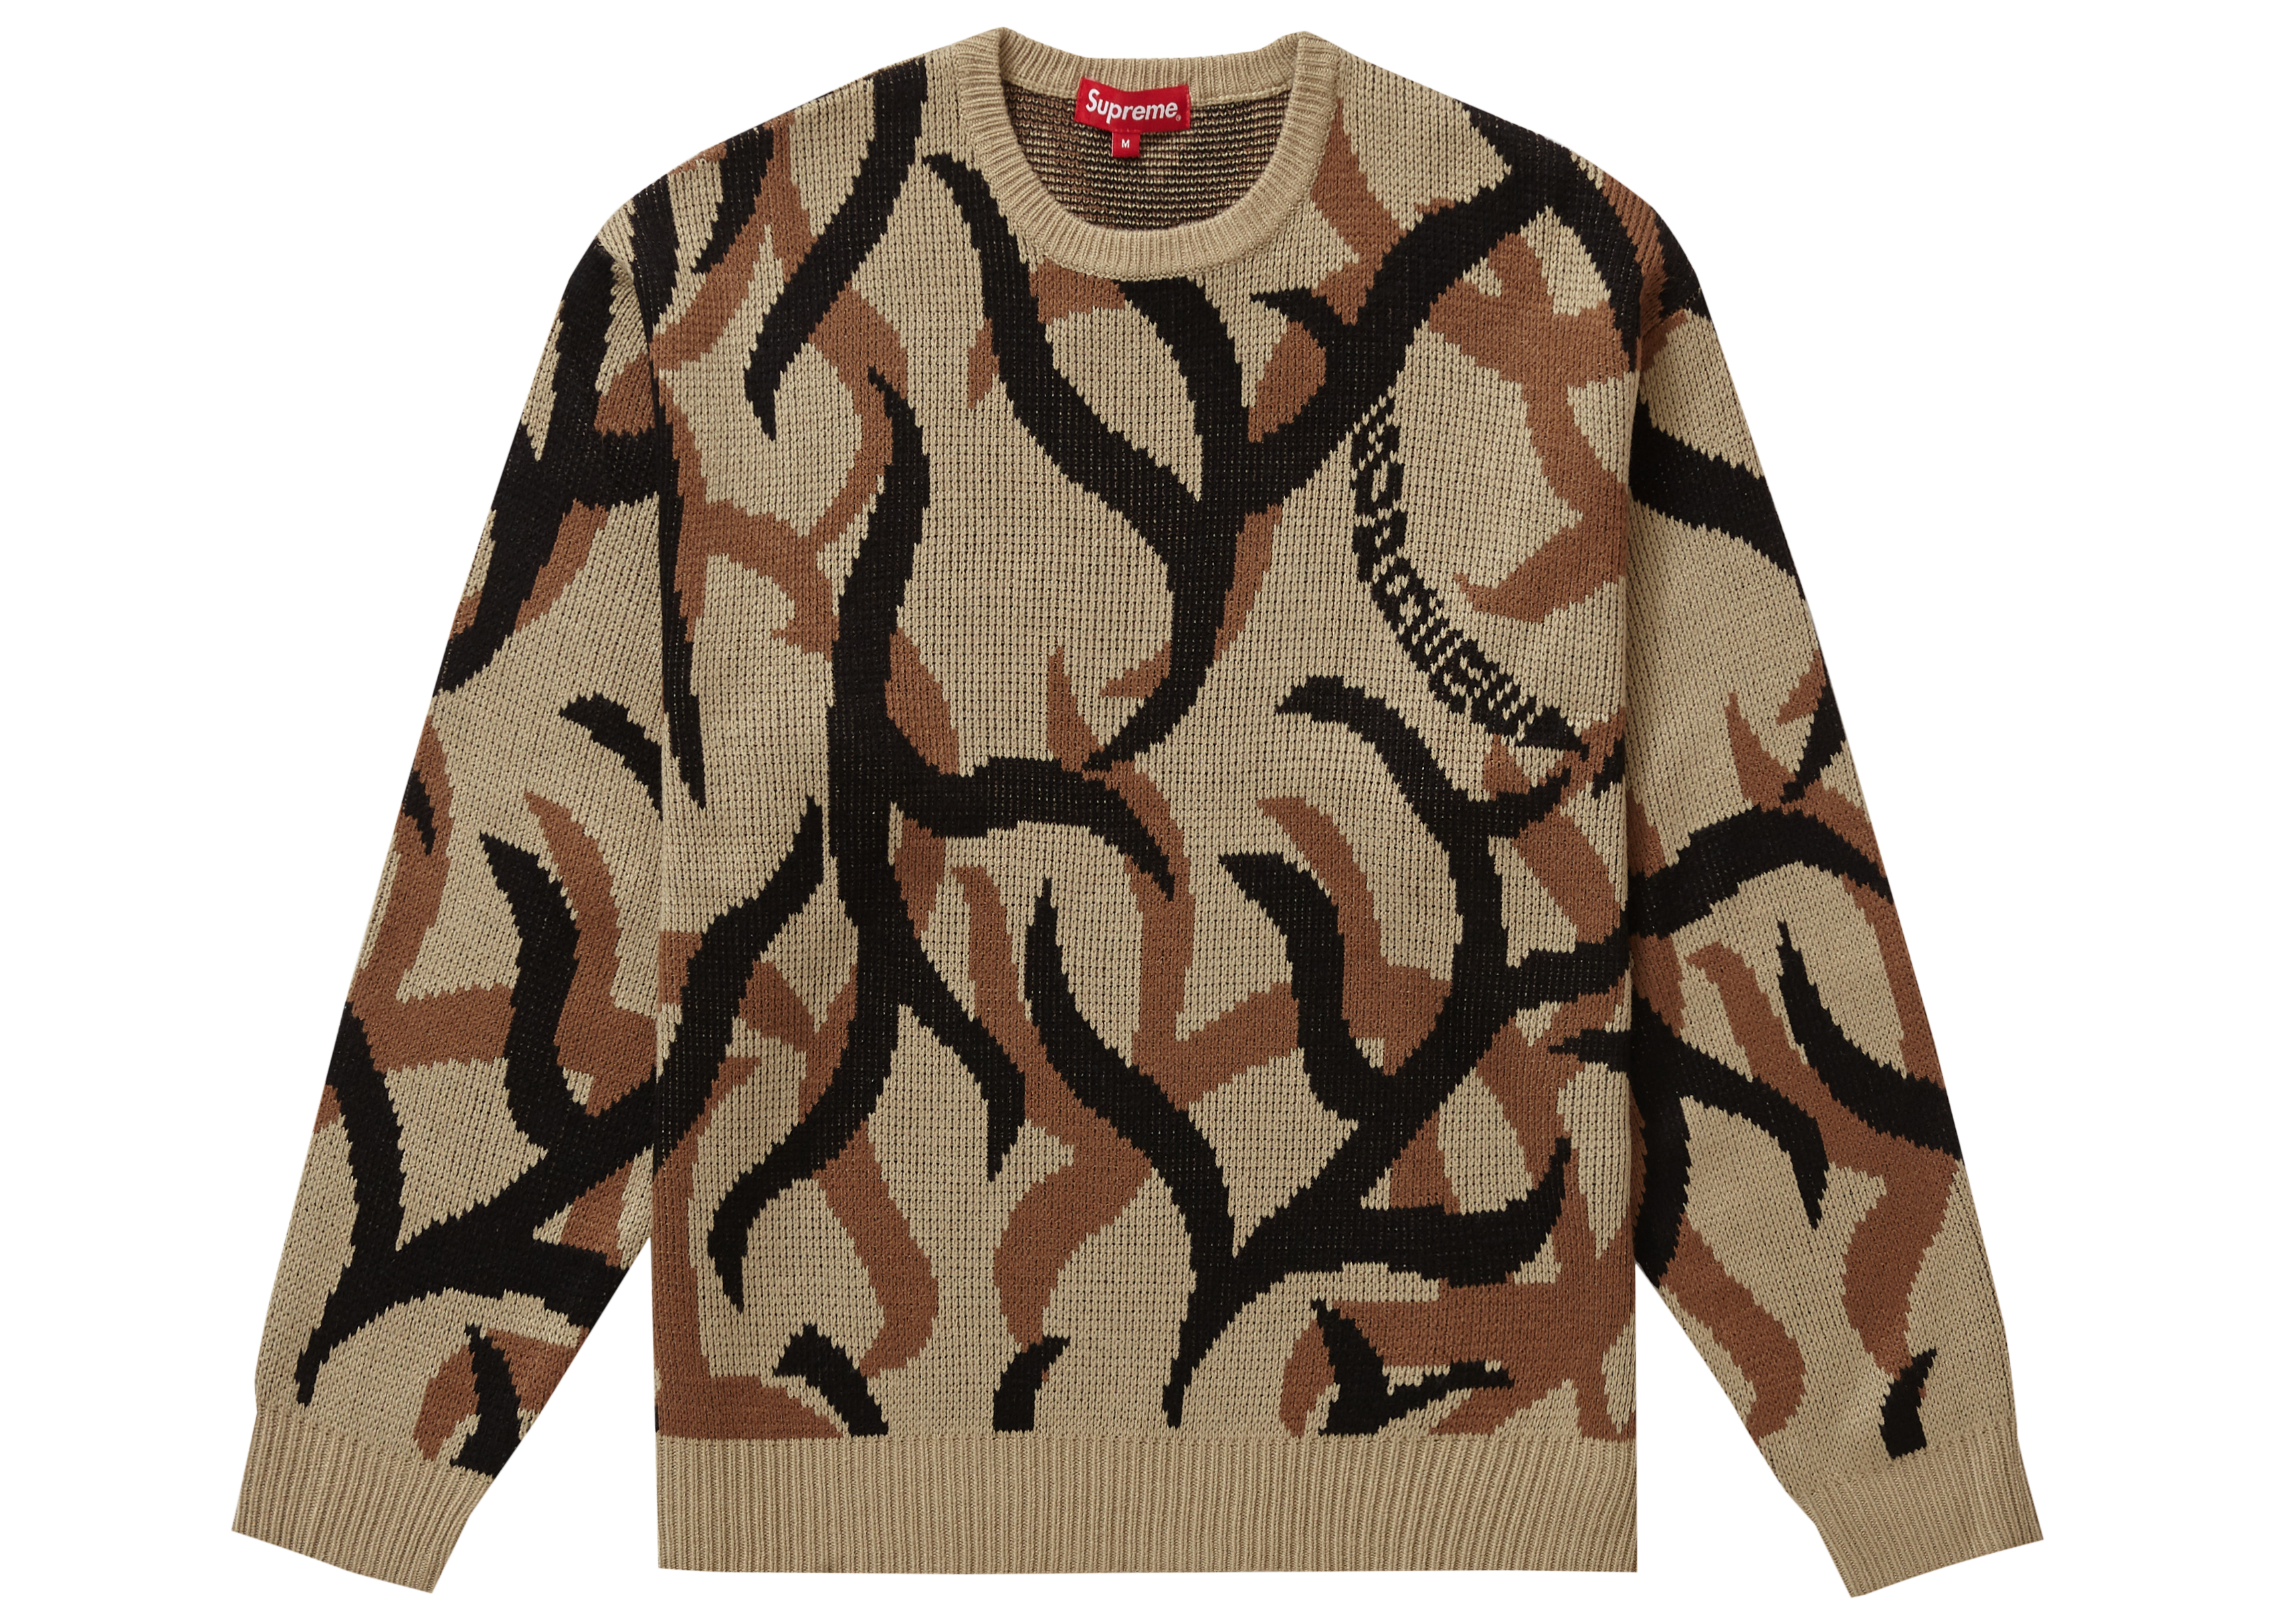 Supreme Tribal Camo Sweater　Mサイズ